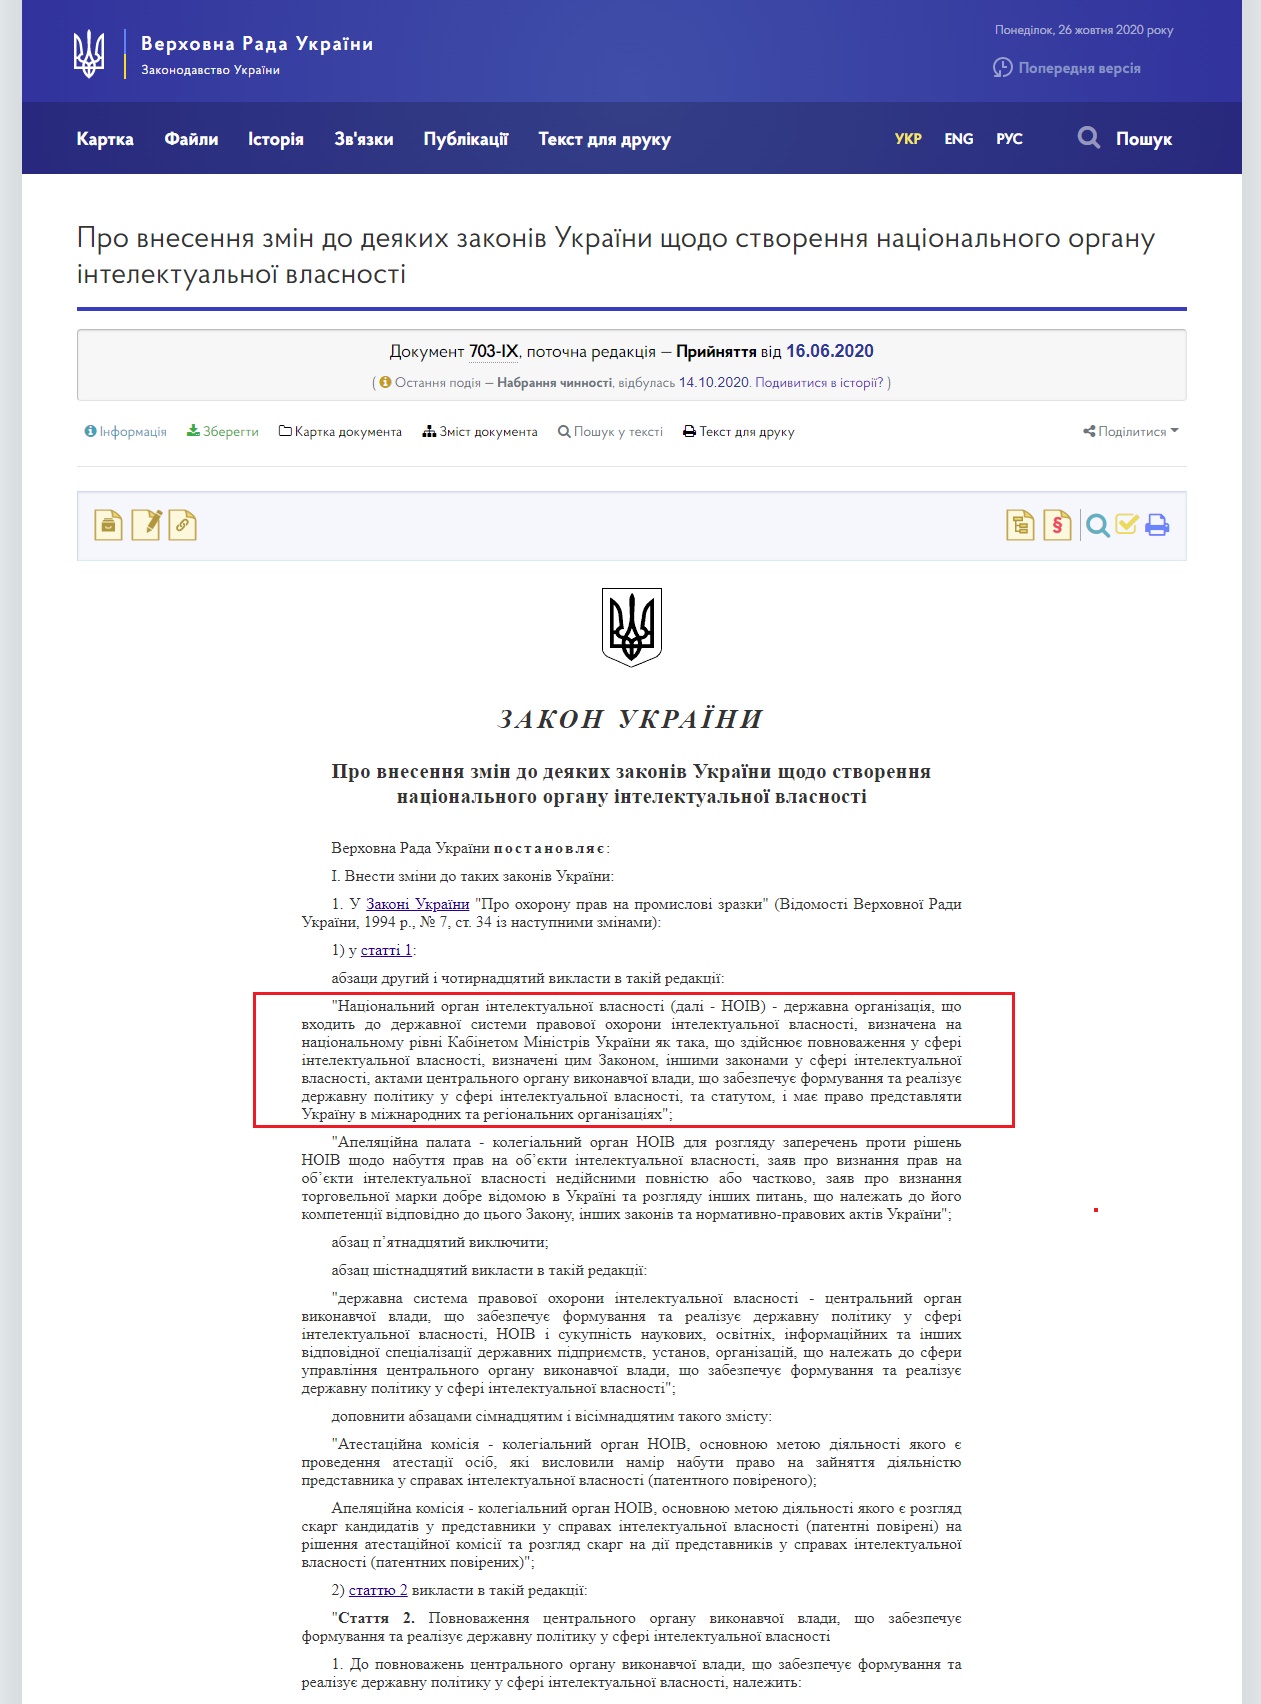 https://zakon.rada.gov.ua/laws/show/703-IX#Text